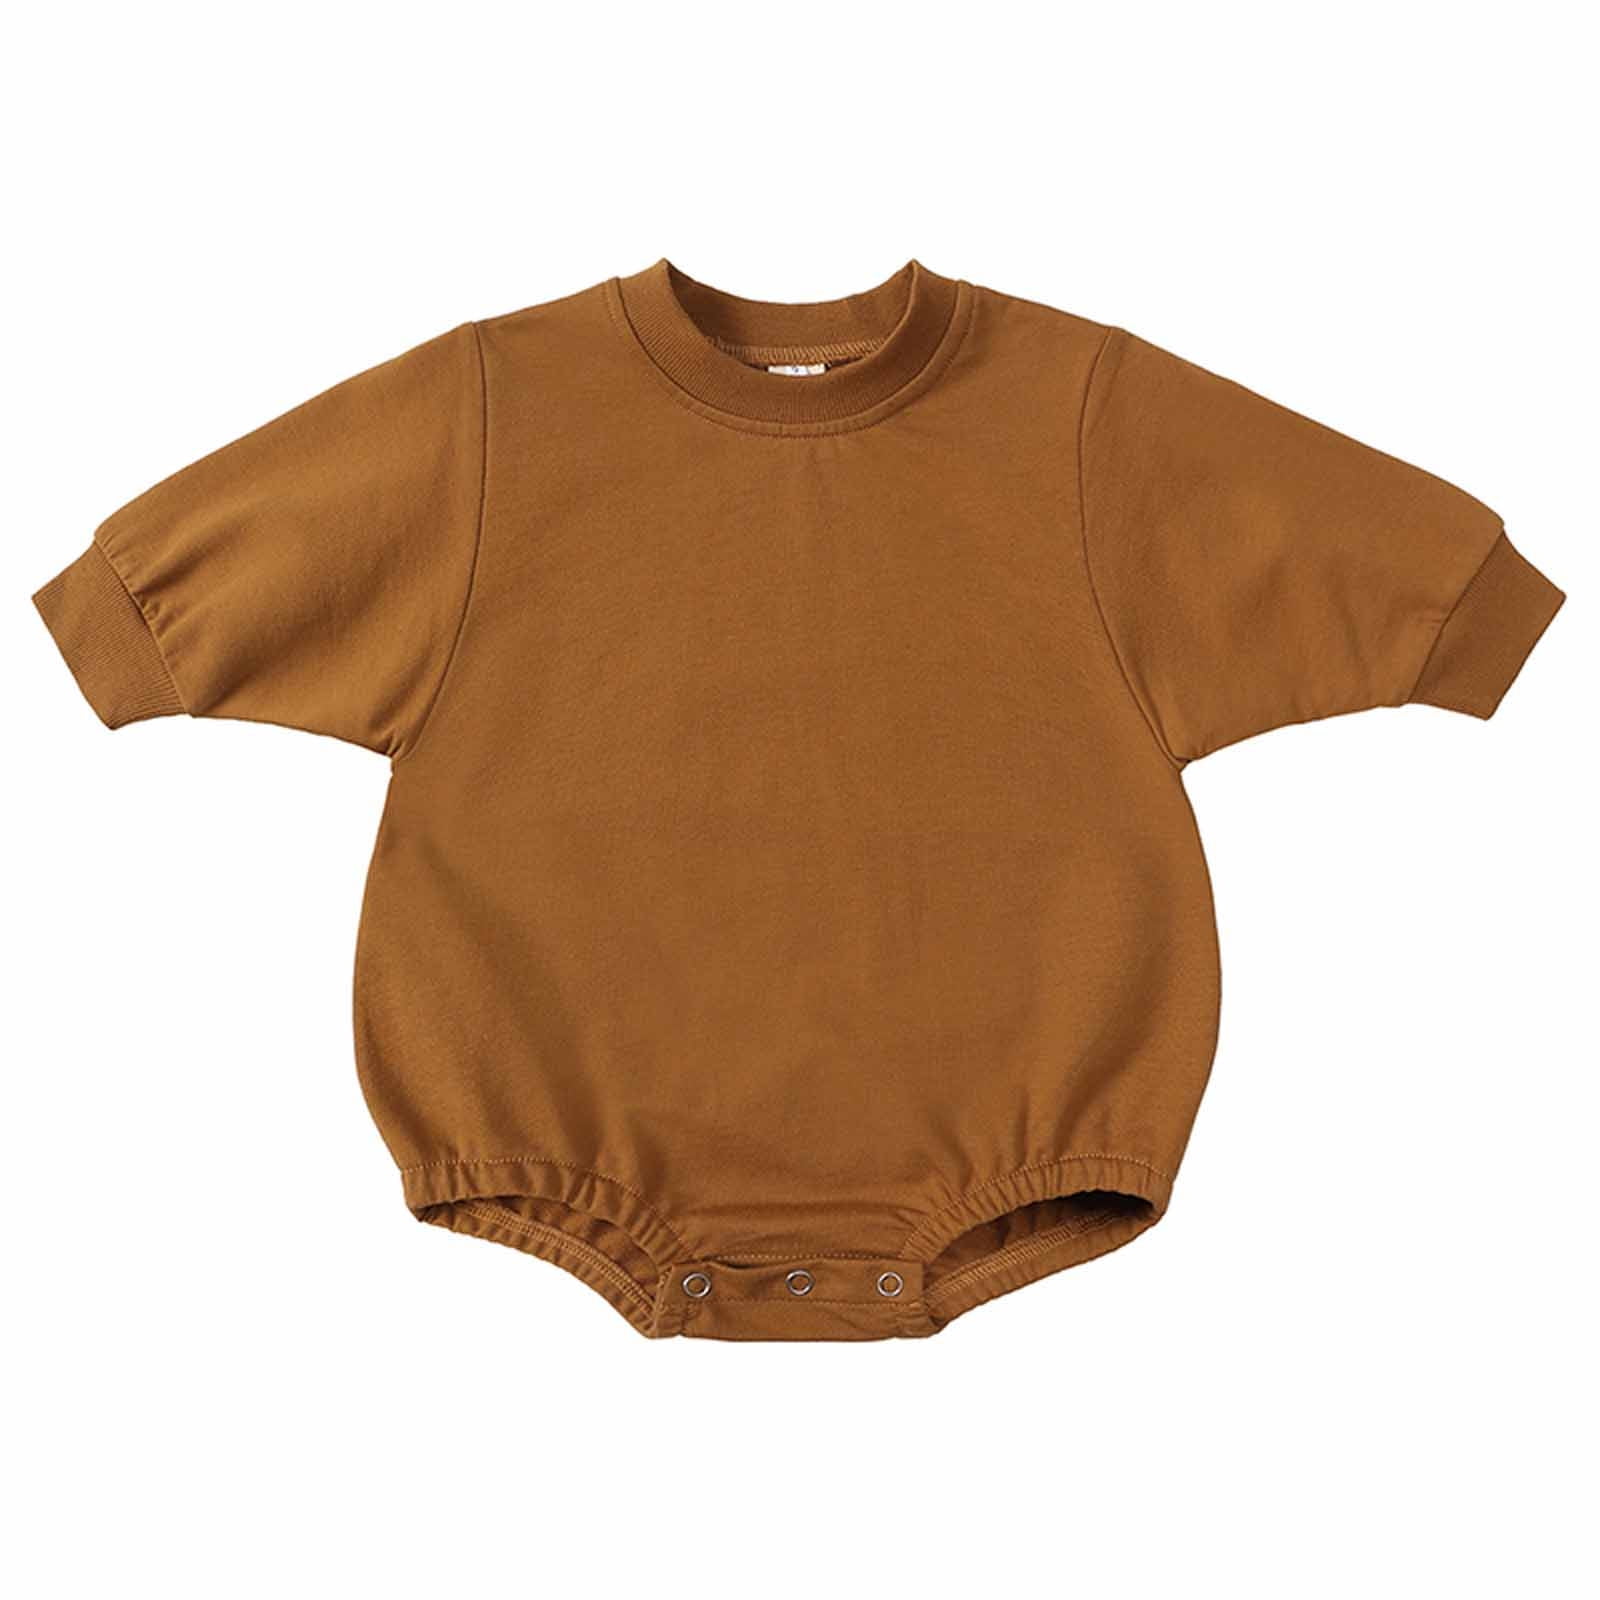 Lolmot Newborn Infant Baby Boy Girl Sweatshirt Romper Solid Onesie Long  Sleeve Bodysuit Top Fall Winter Outfit on Clearance 